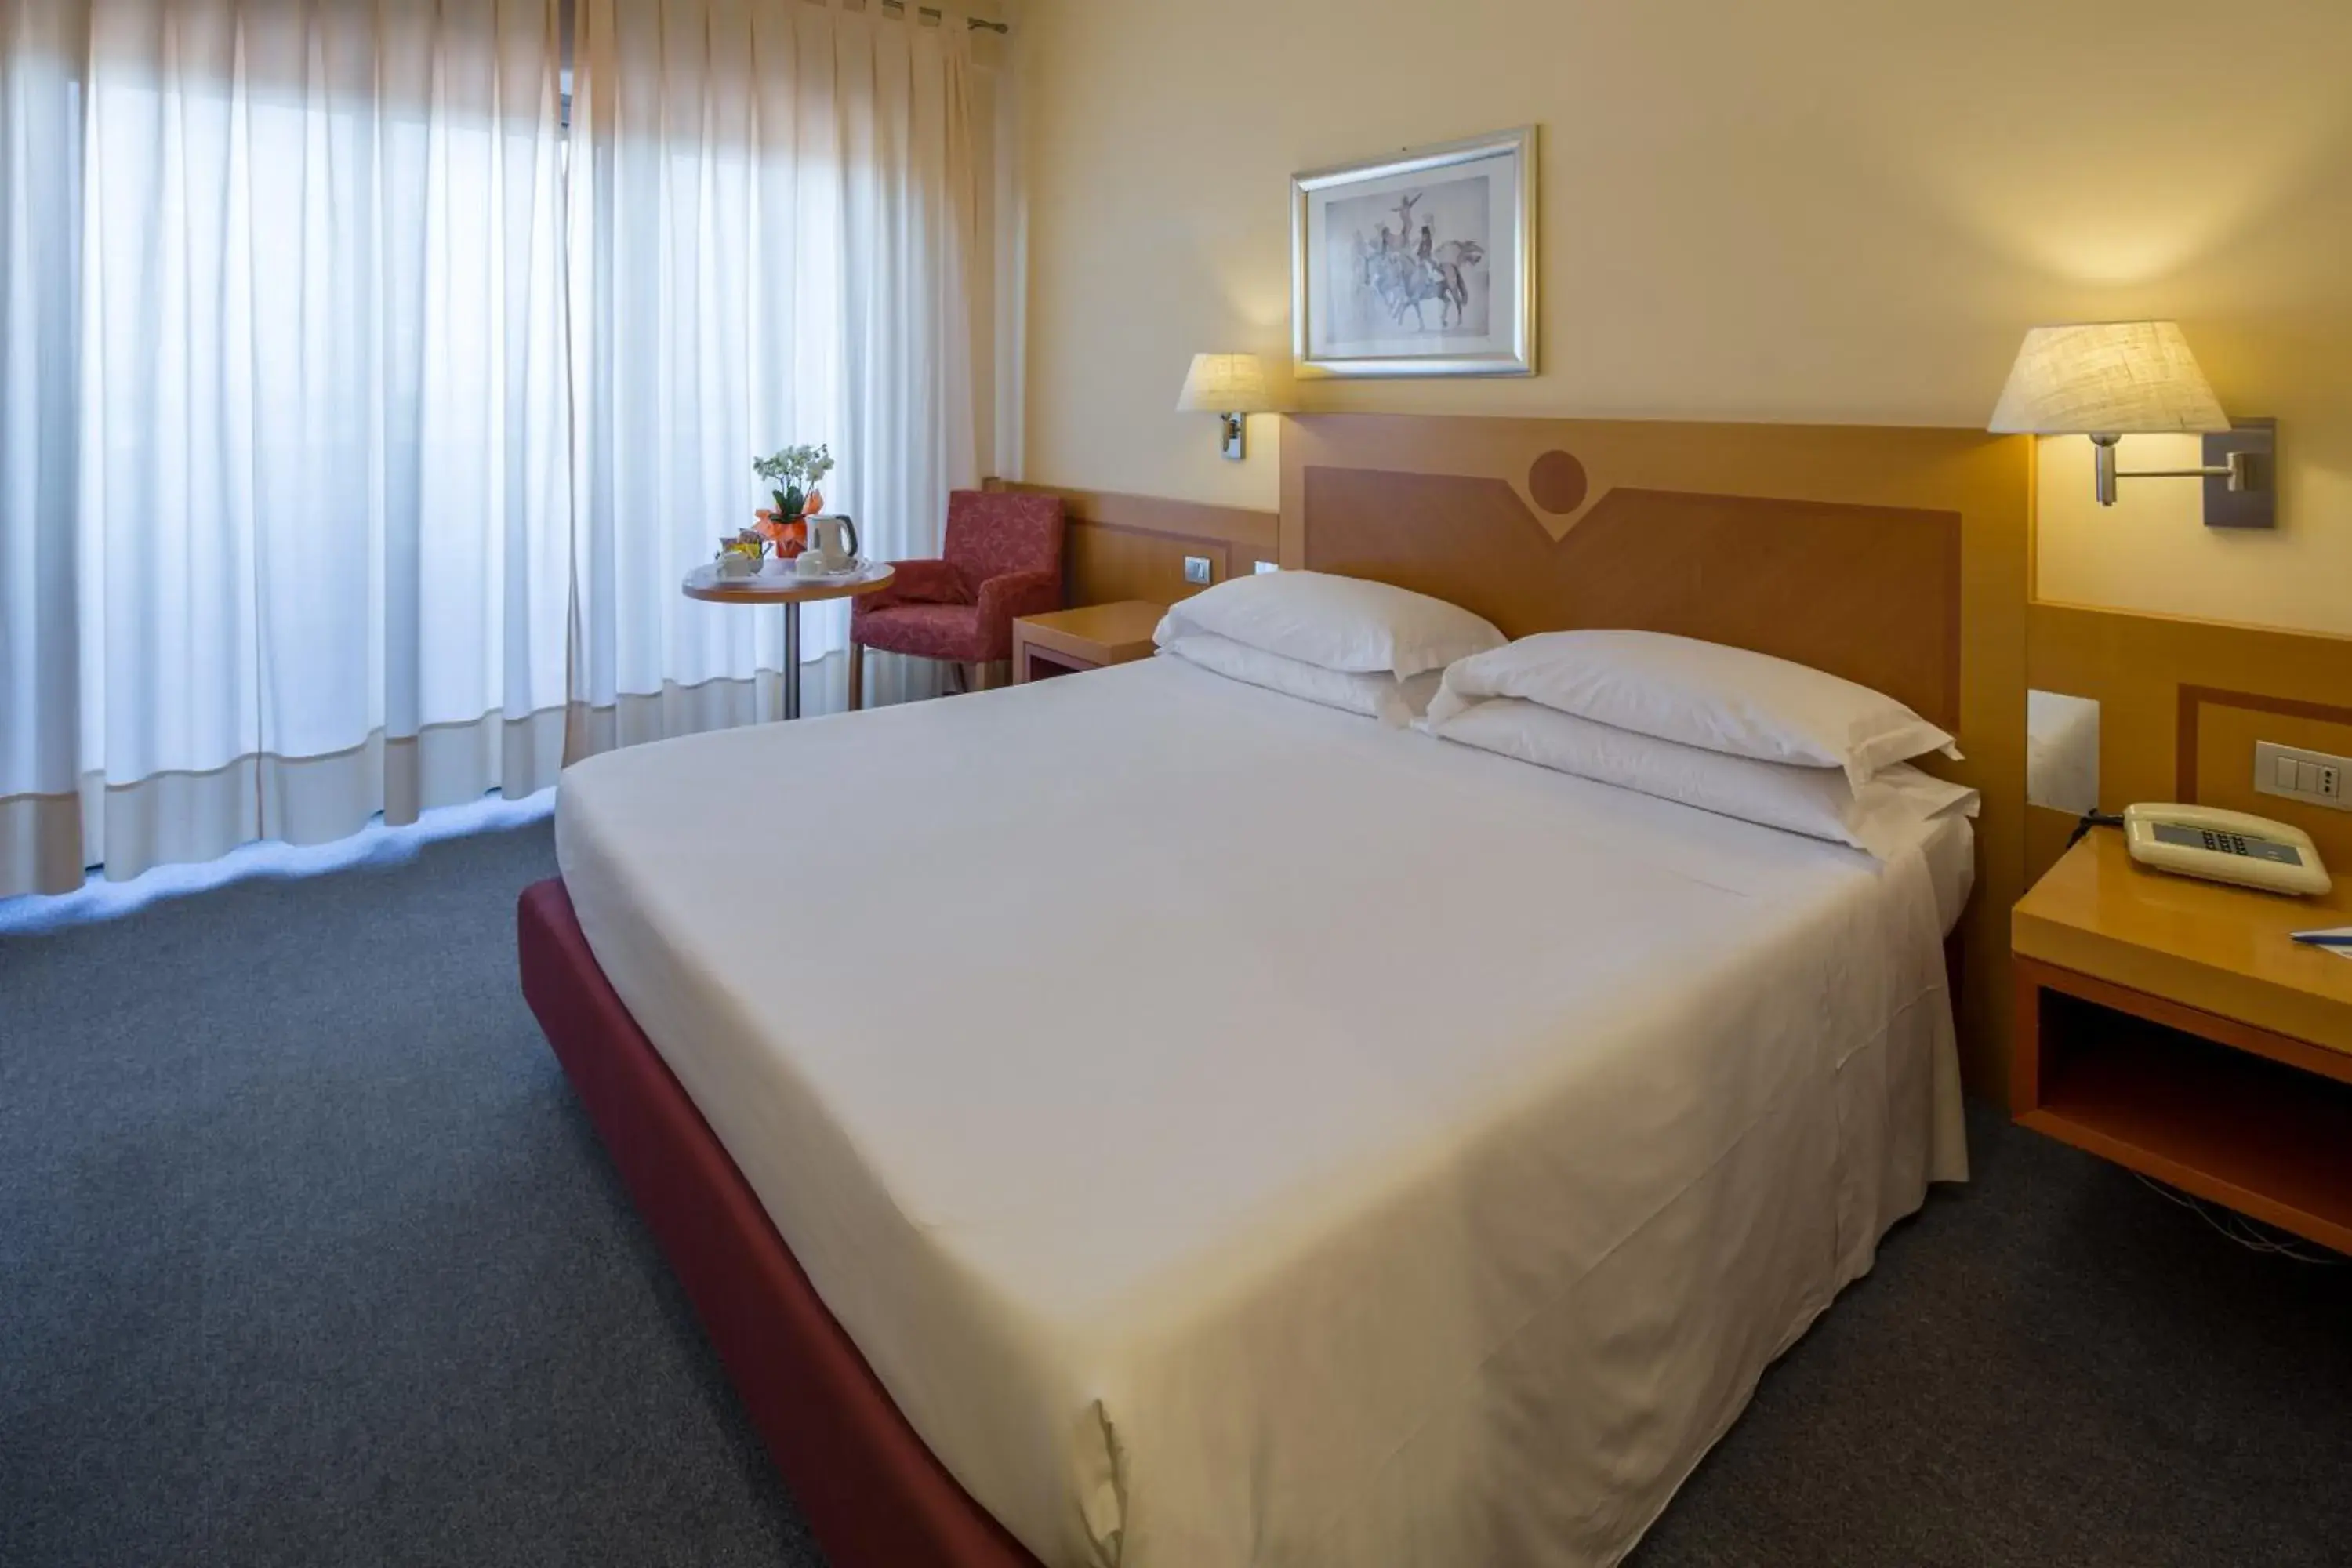 Bed, Room Photo in Best Western Hotel I Triangoli